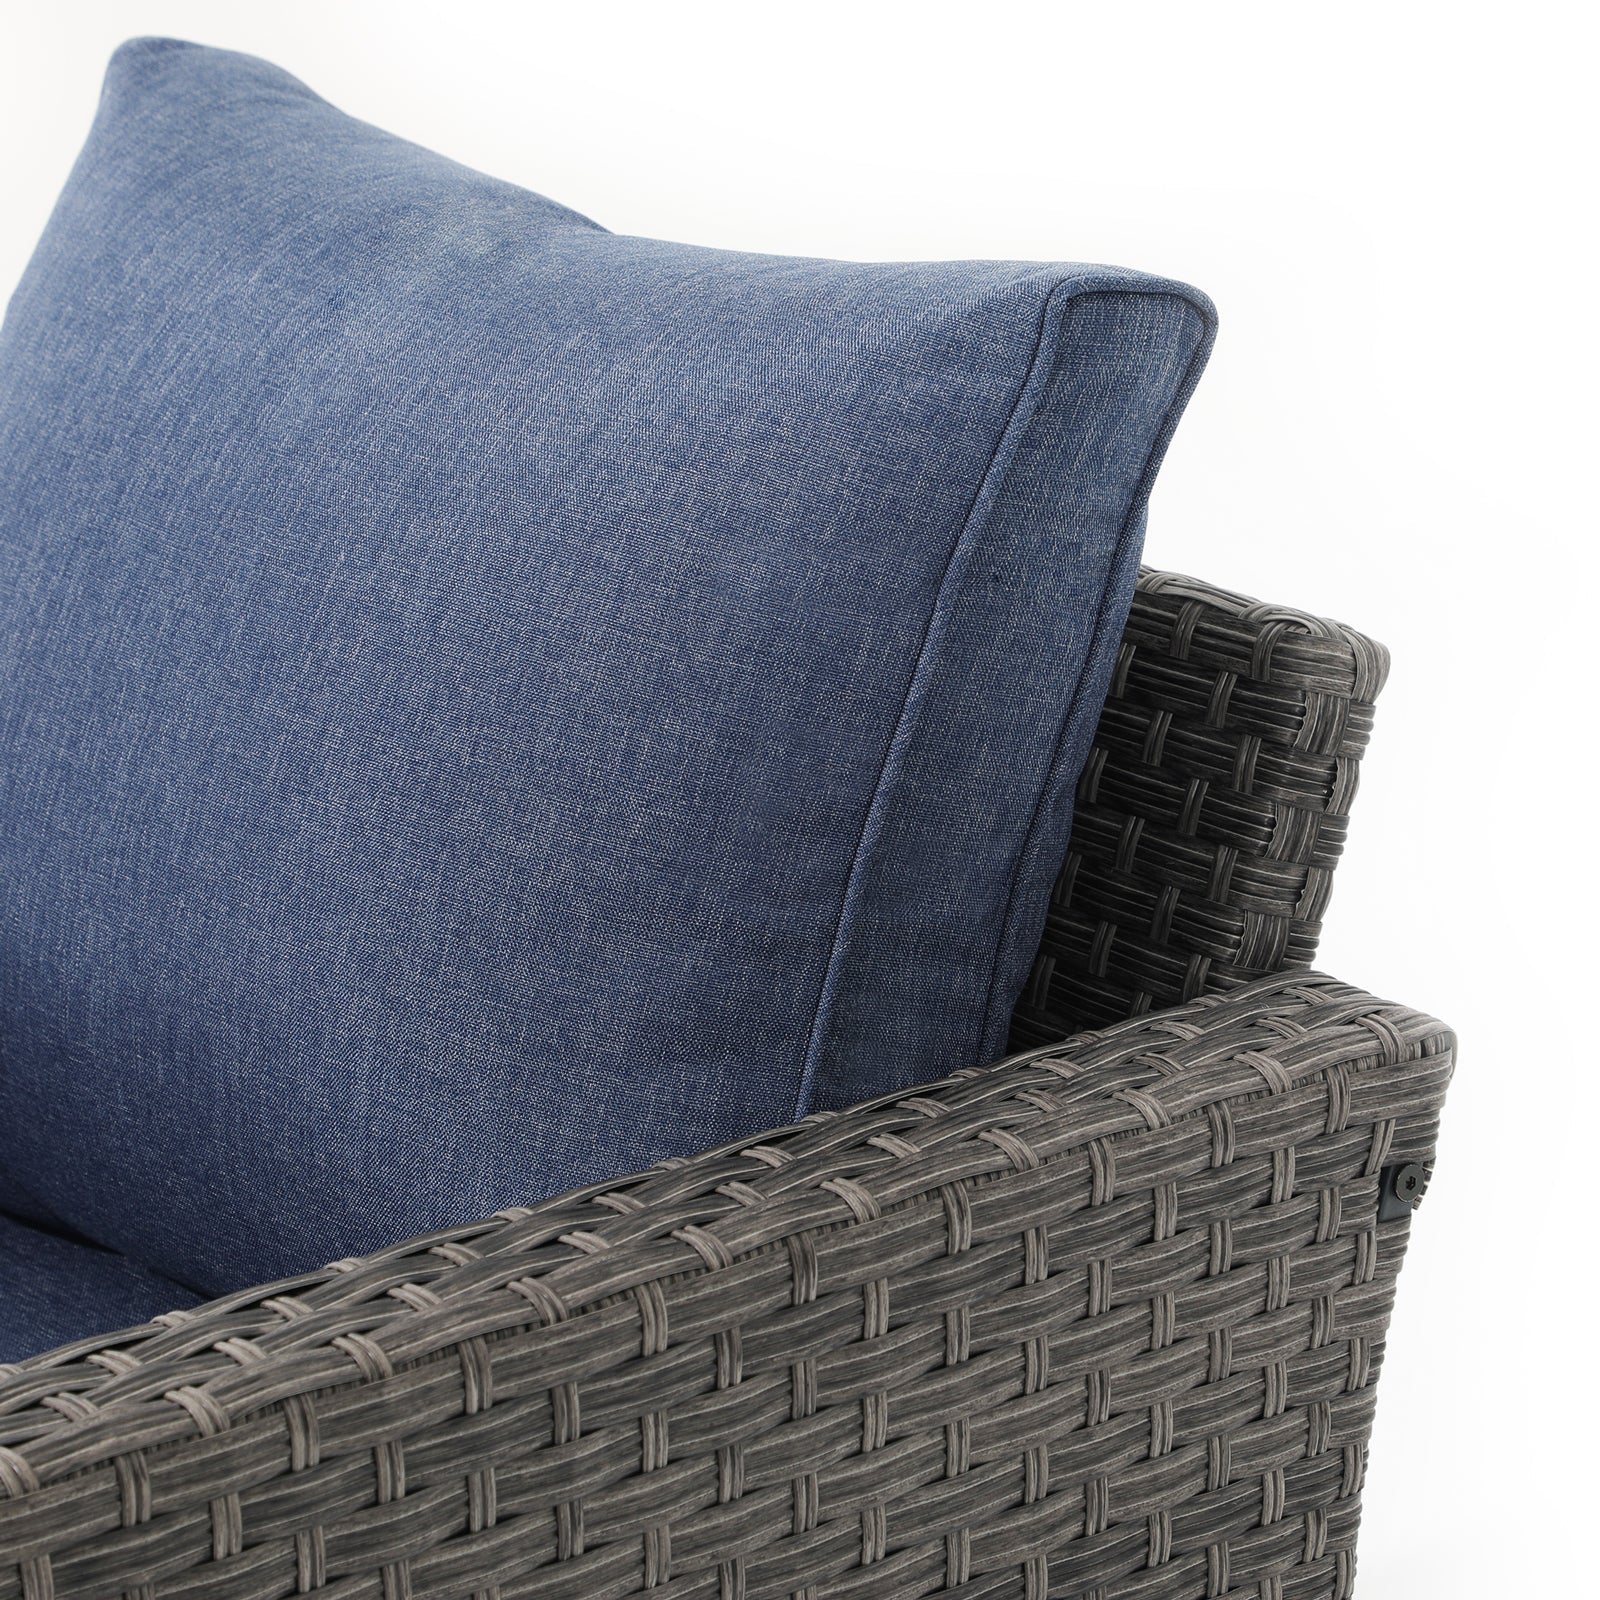 Ayia lounge chair, grey rattan, navy blue cushion, detailed information - Jardina Furniture #color_Navy blue